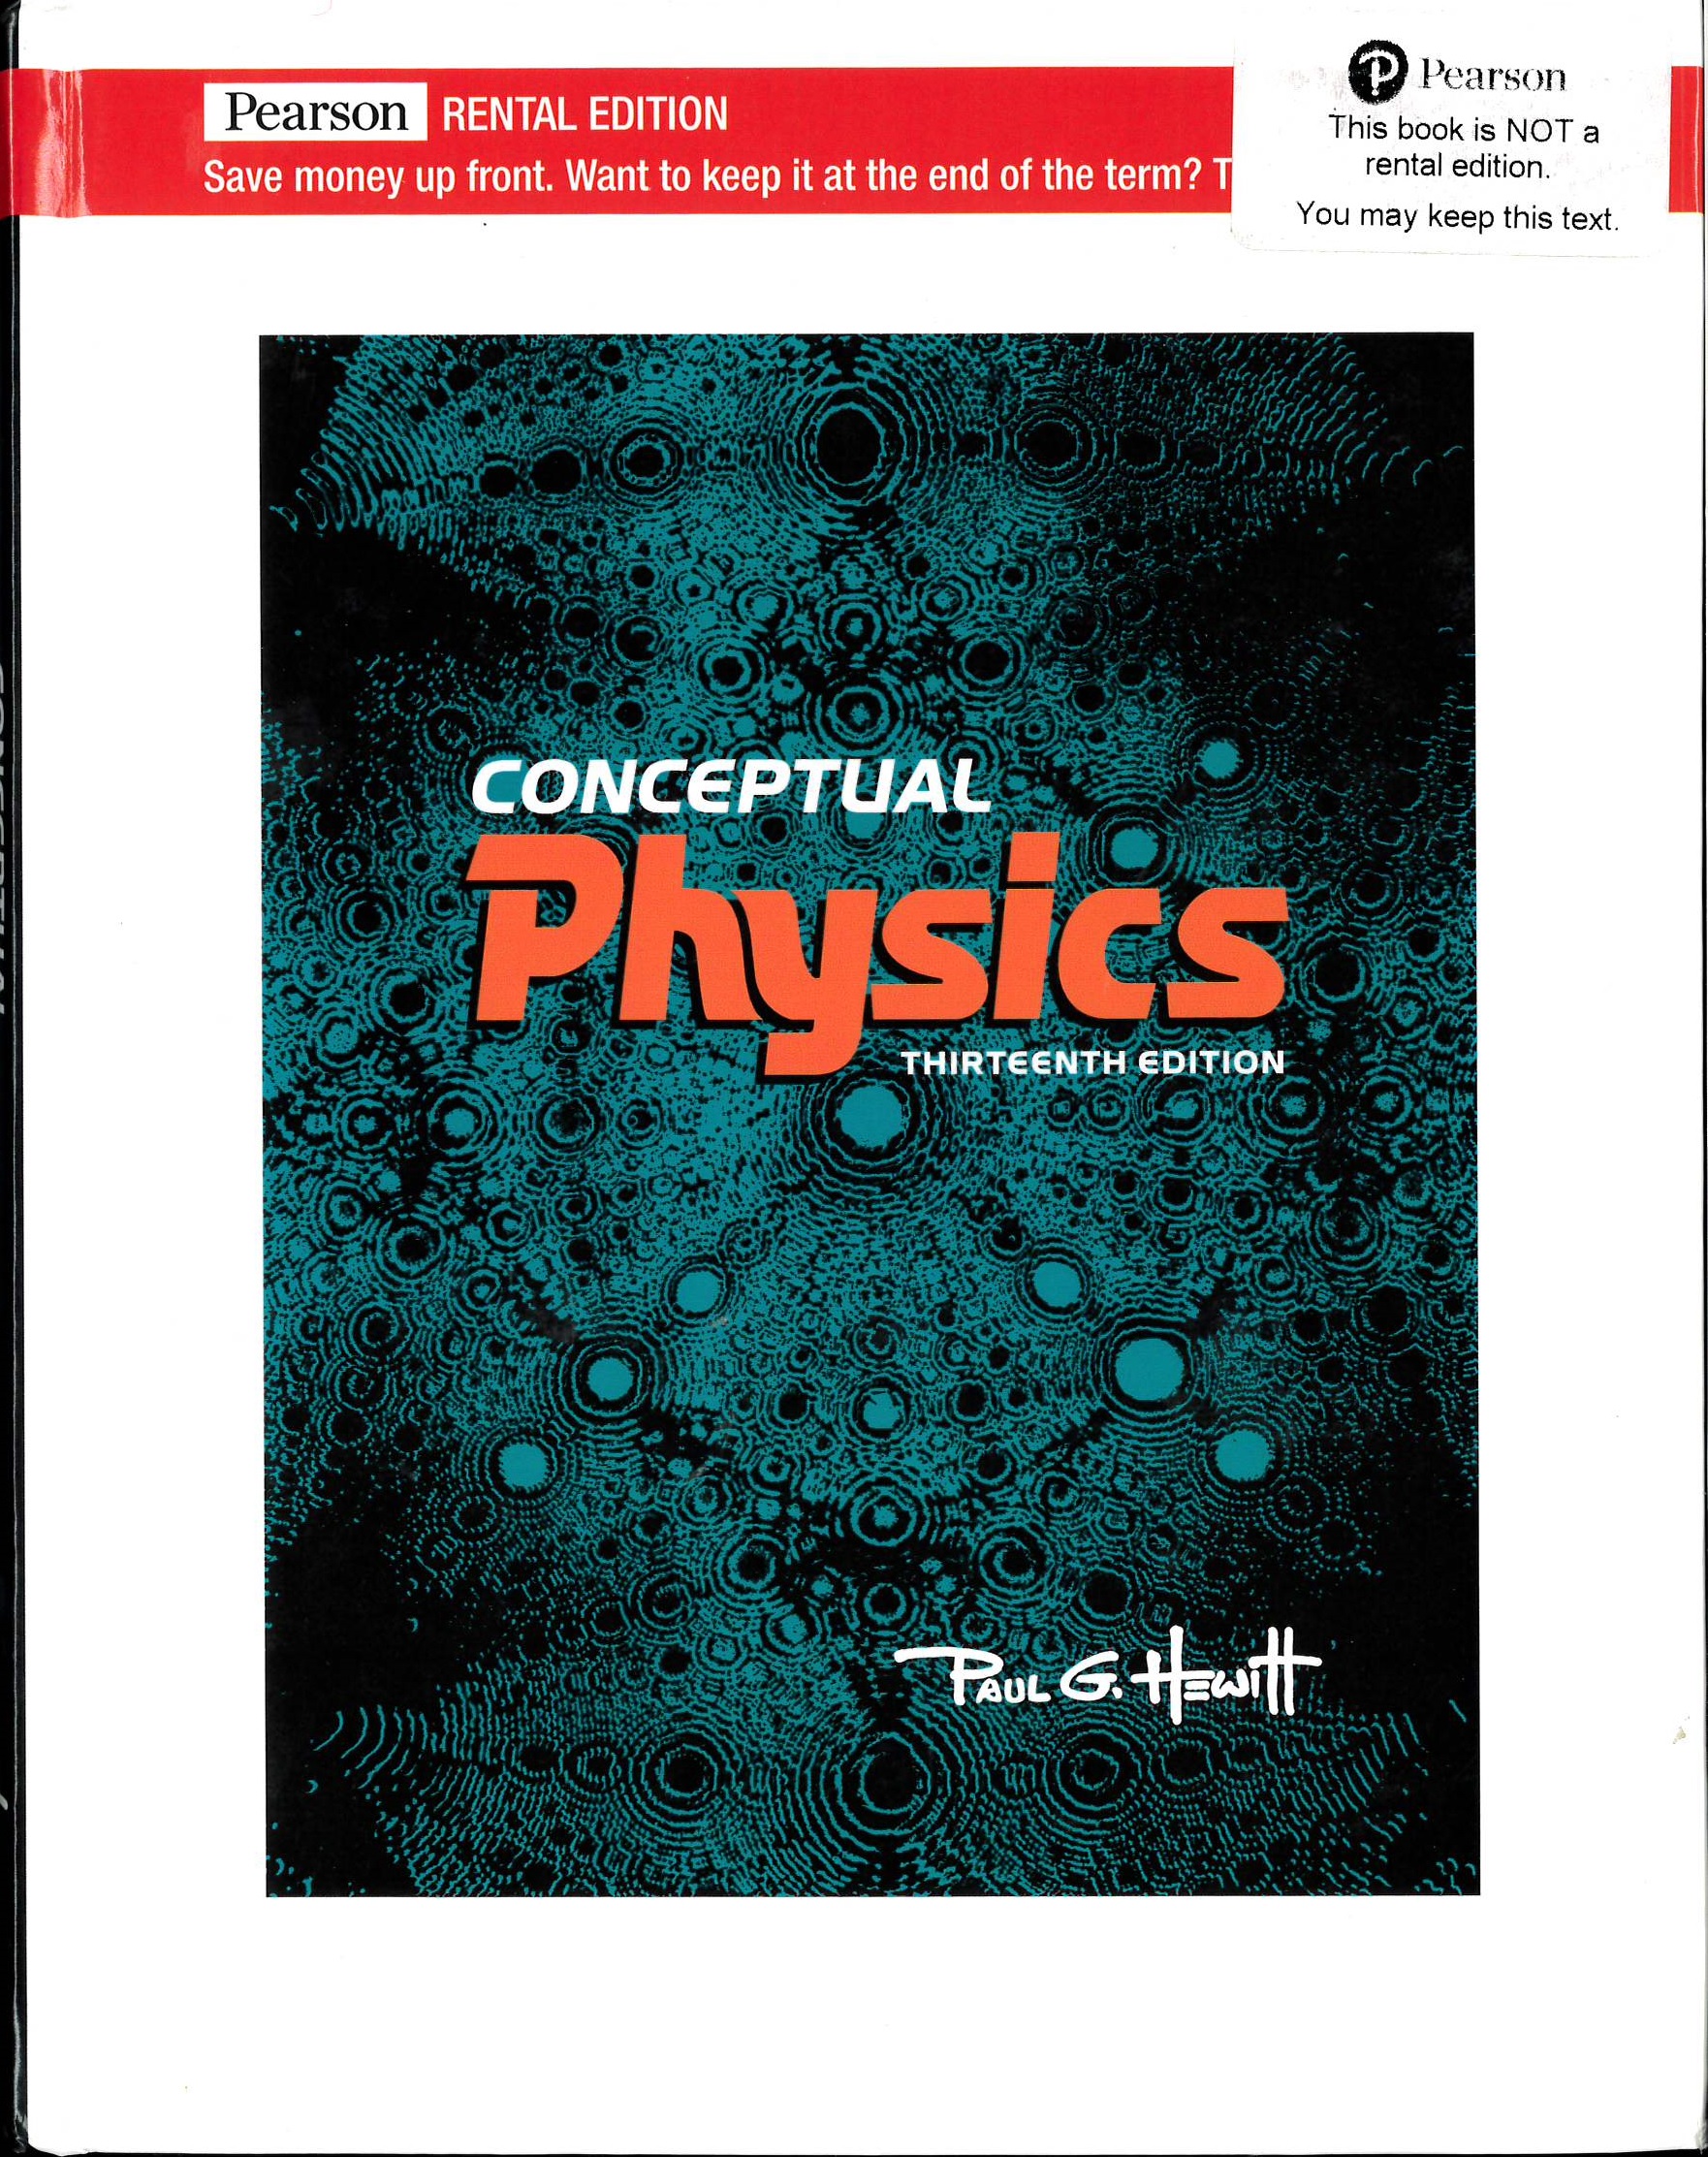 Conceptual physics